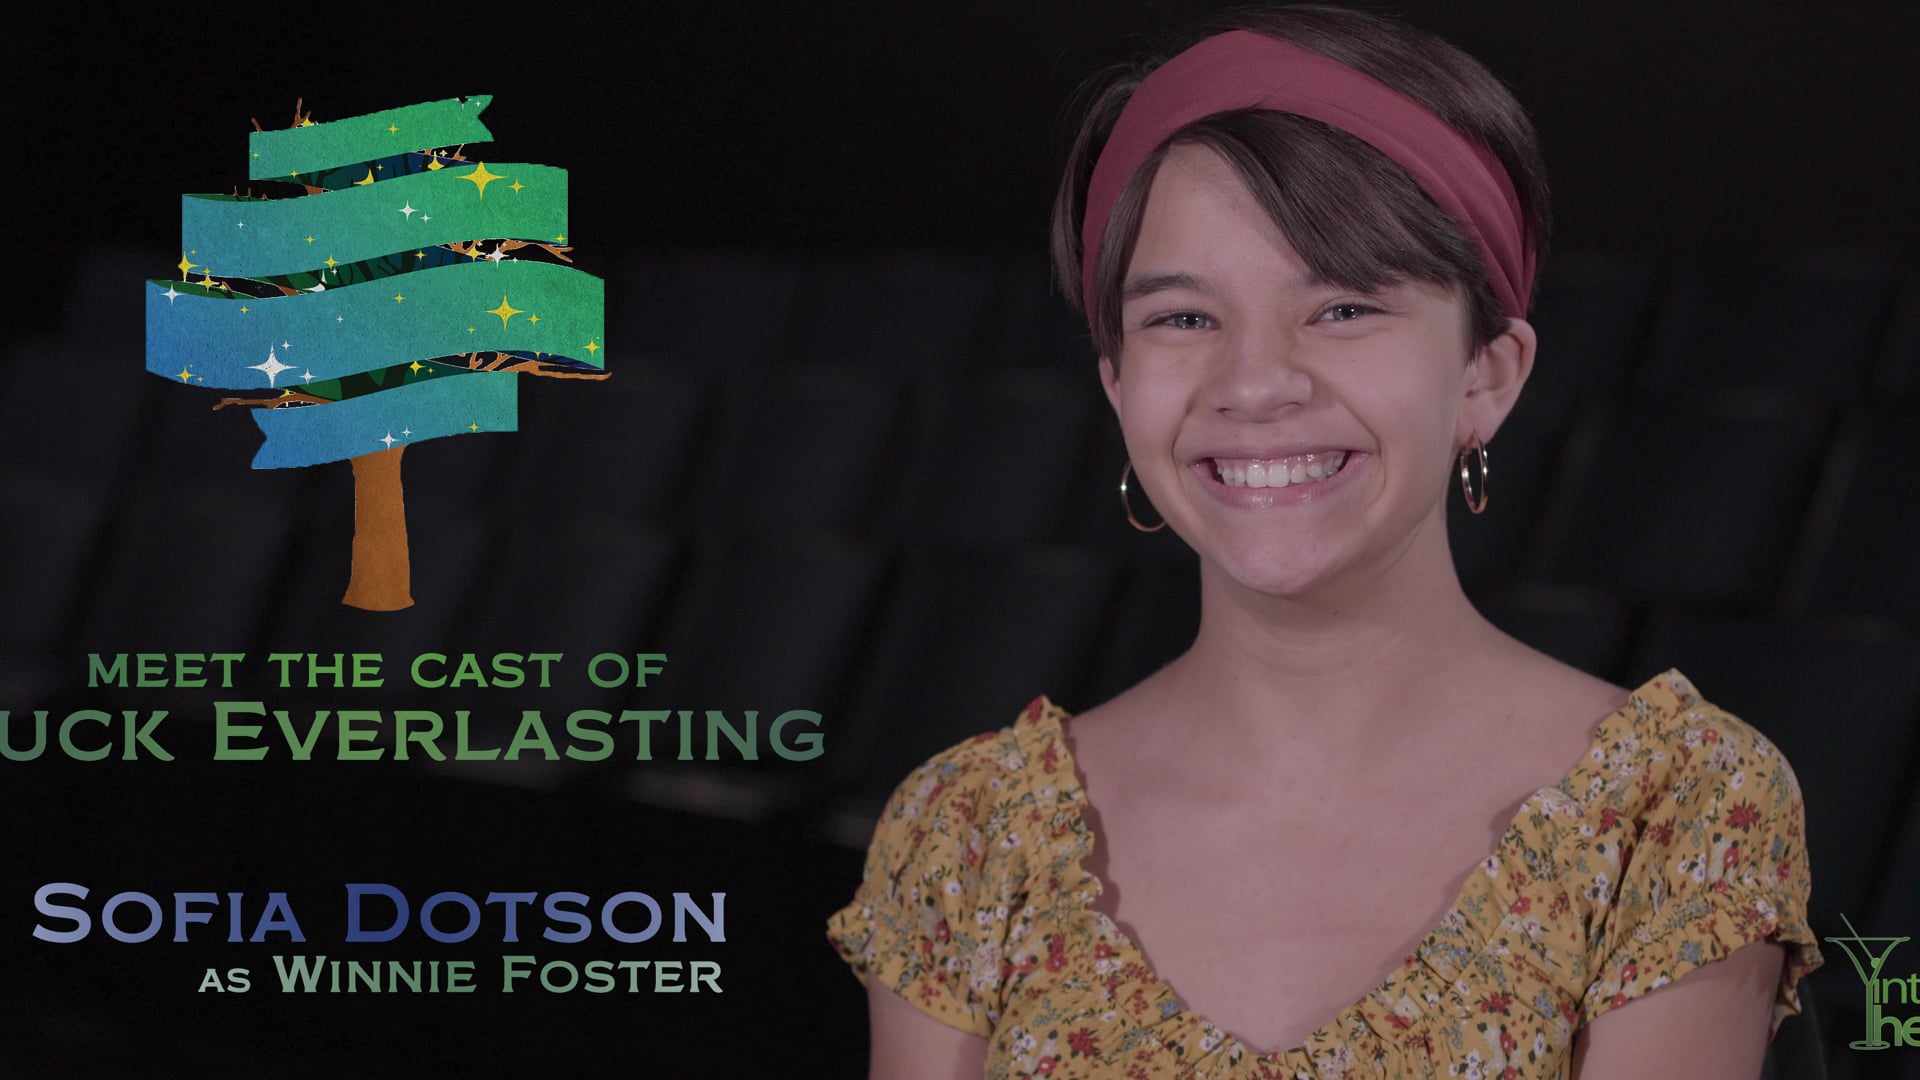 Meet the Cast of Tuck Everlasting (Sophia Dotson as Winnie Foster)